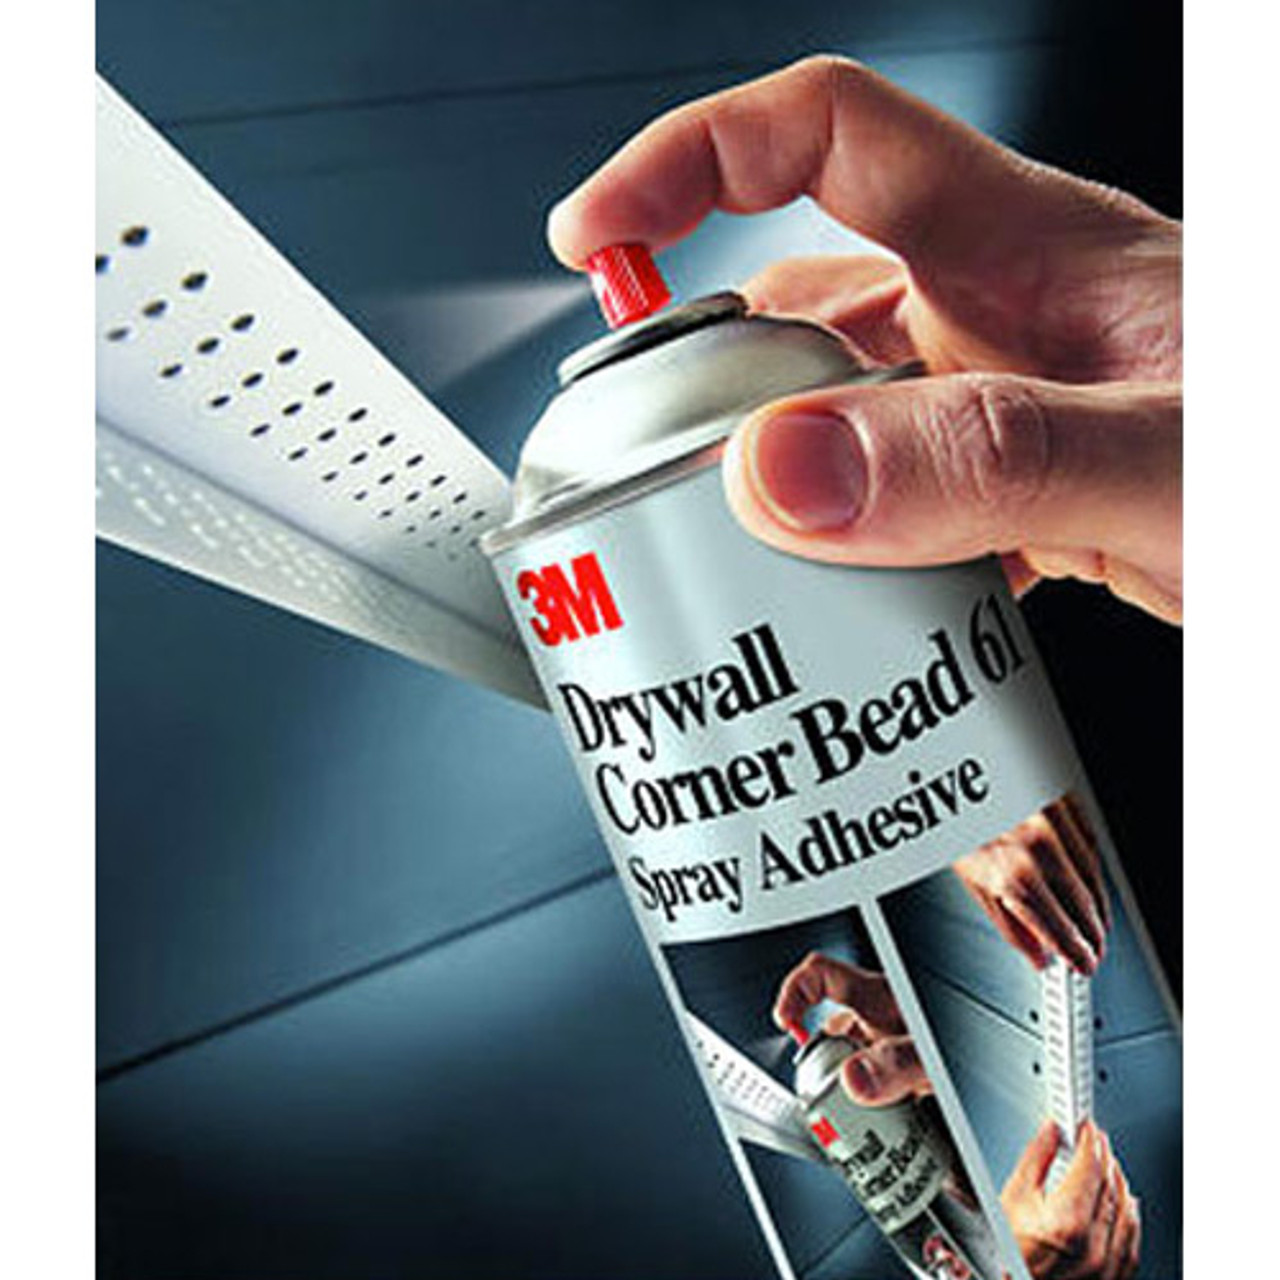 3M Drywall Corner Bead 61 Spray Adhesive